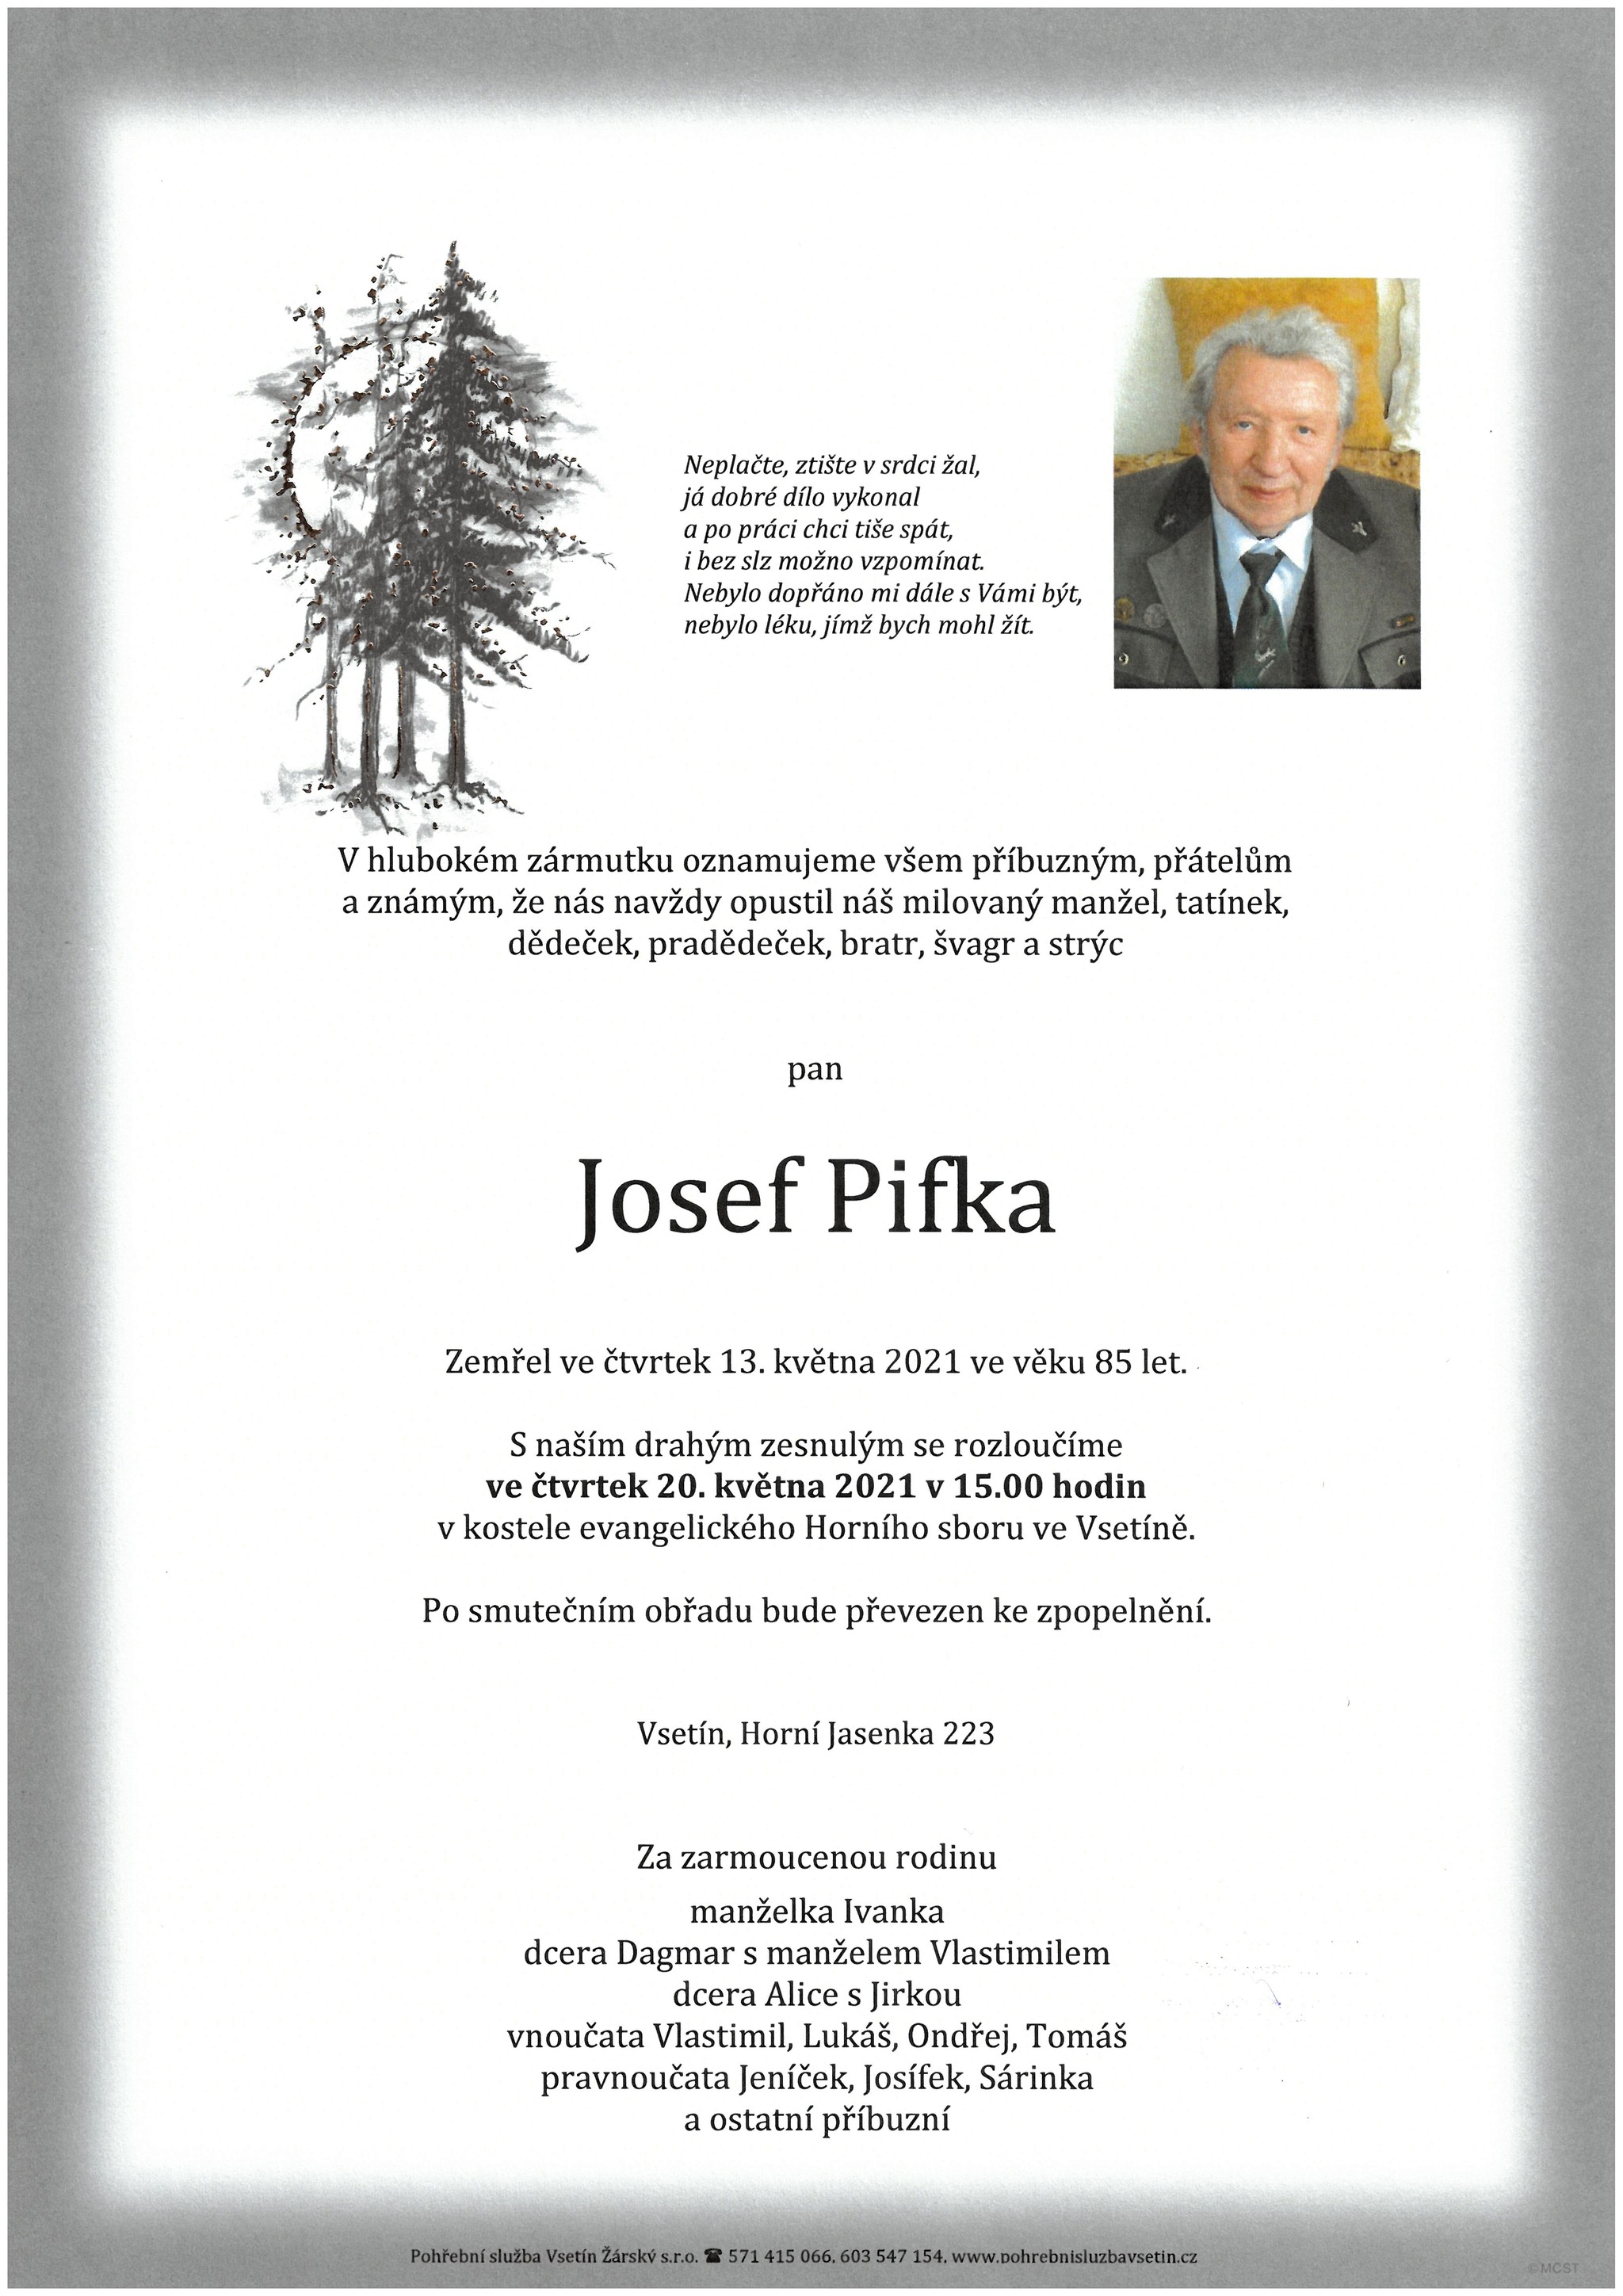 Josef Pifka